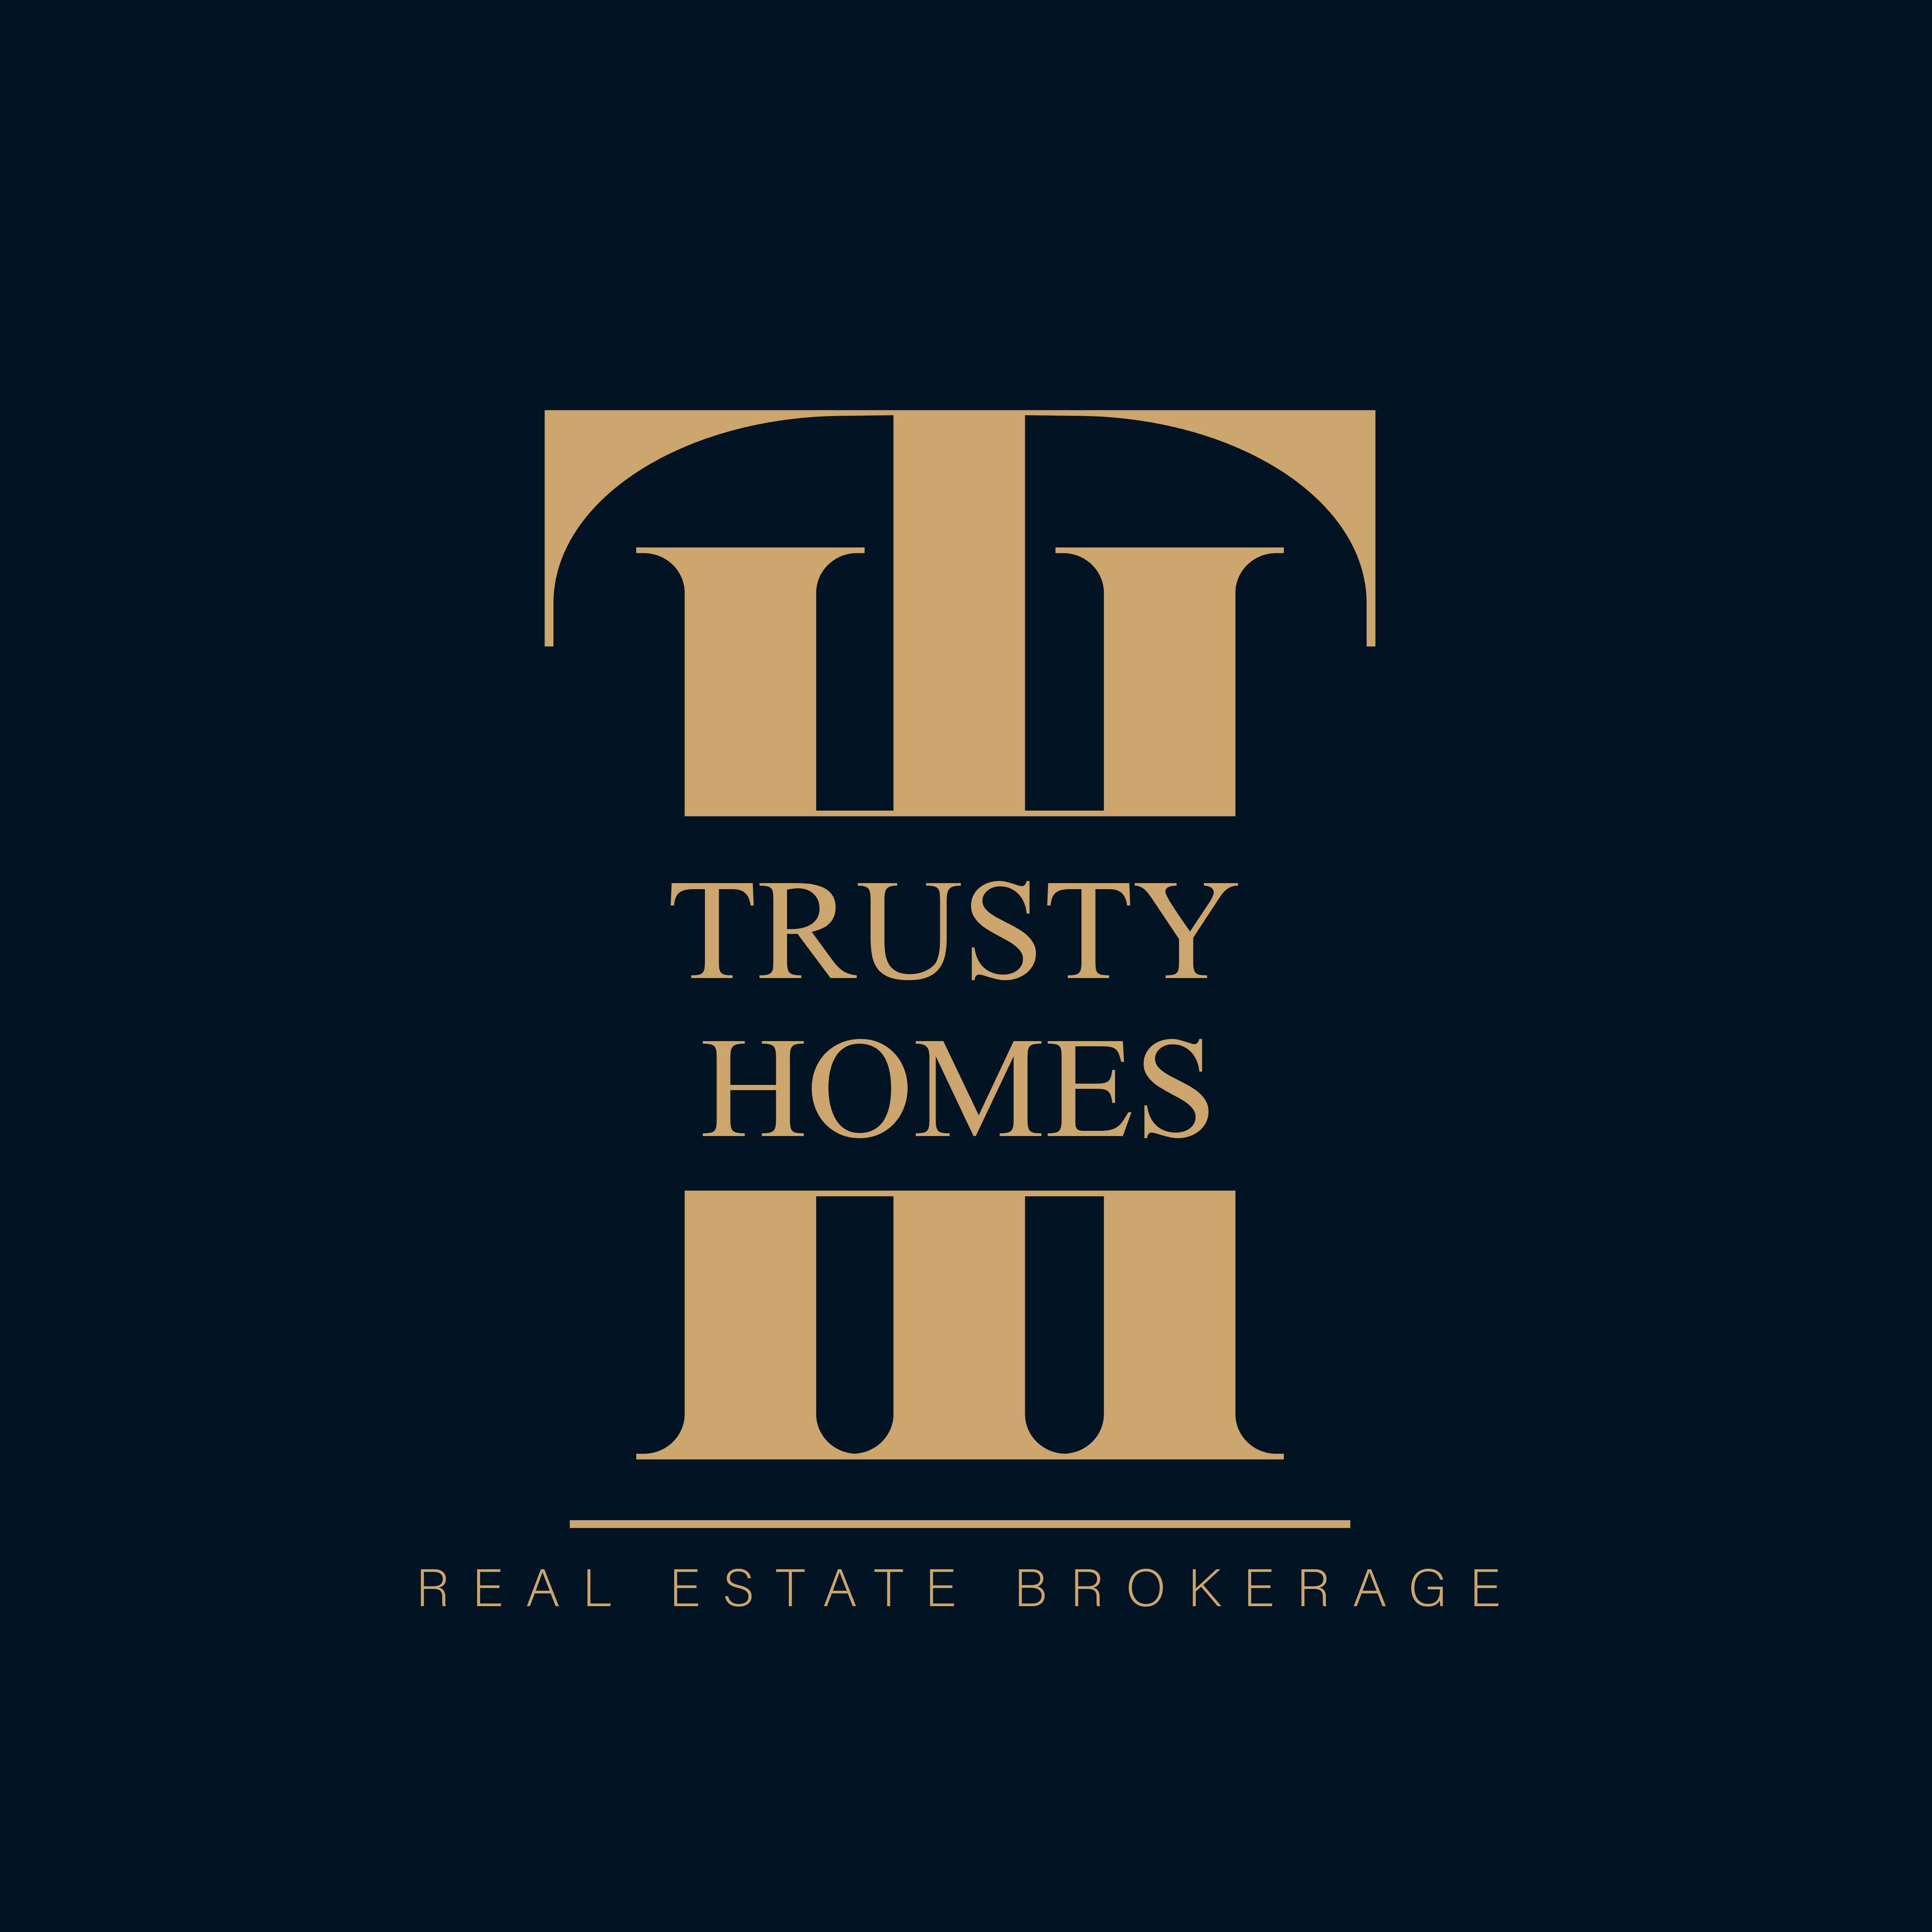 Trusty Homes -A. K